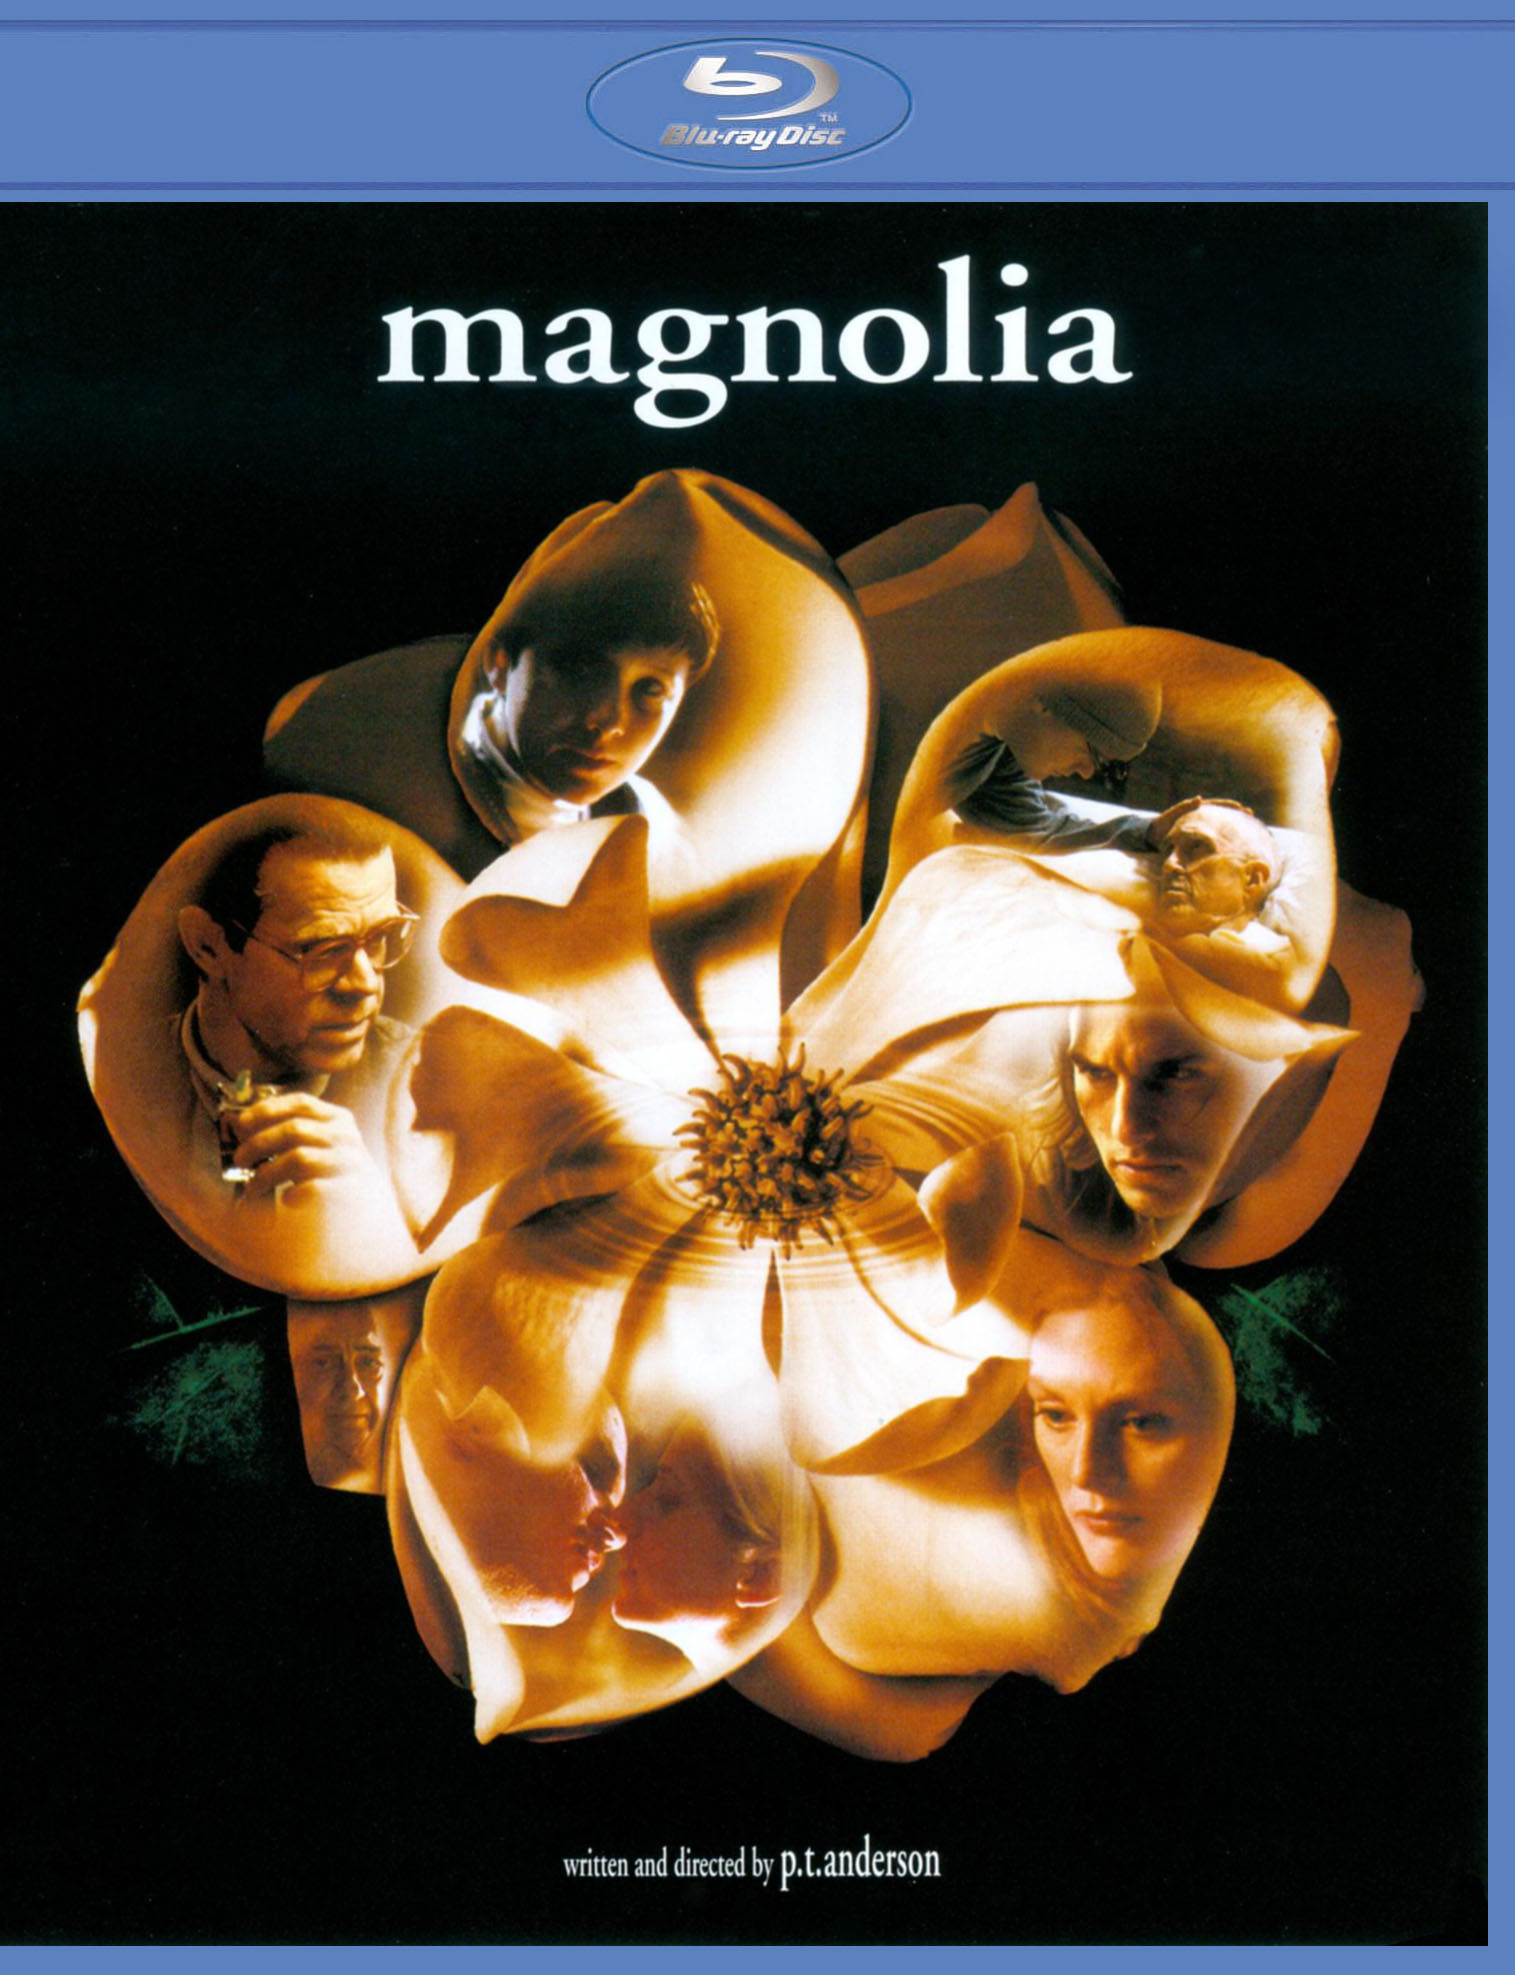 Magnolia [Blu-ray] [1999] - Best Buy